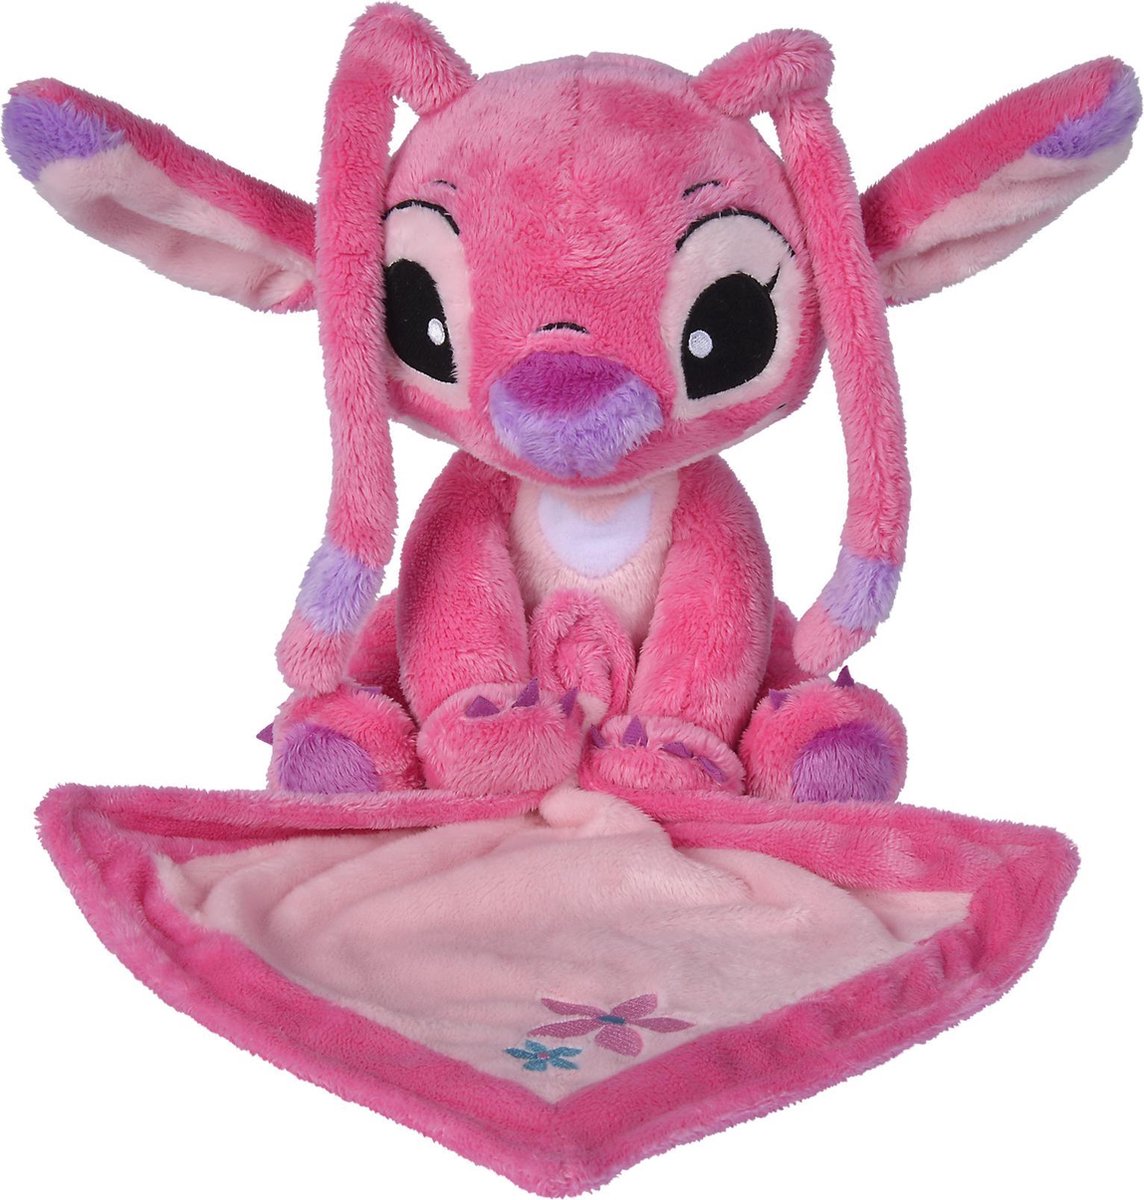 Disney Plush - Lilo and Stitch - Sitting Angel 14